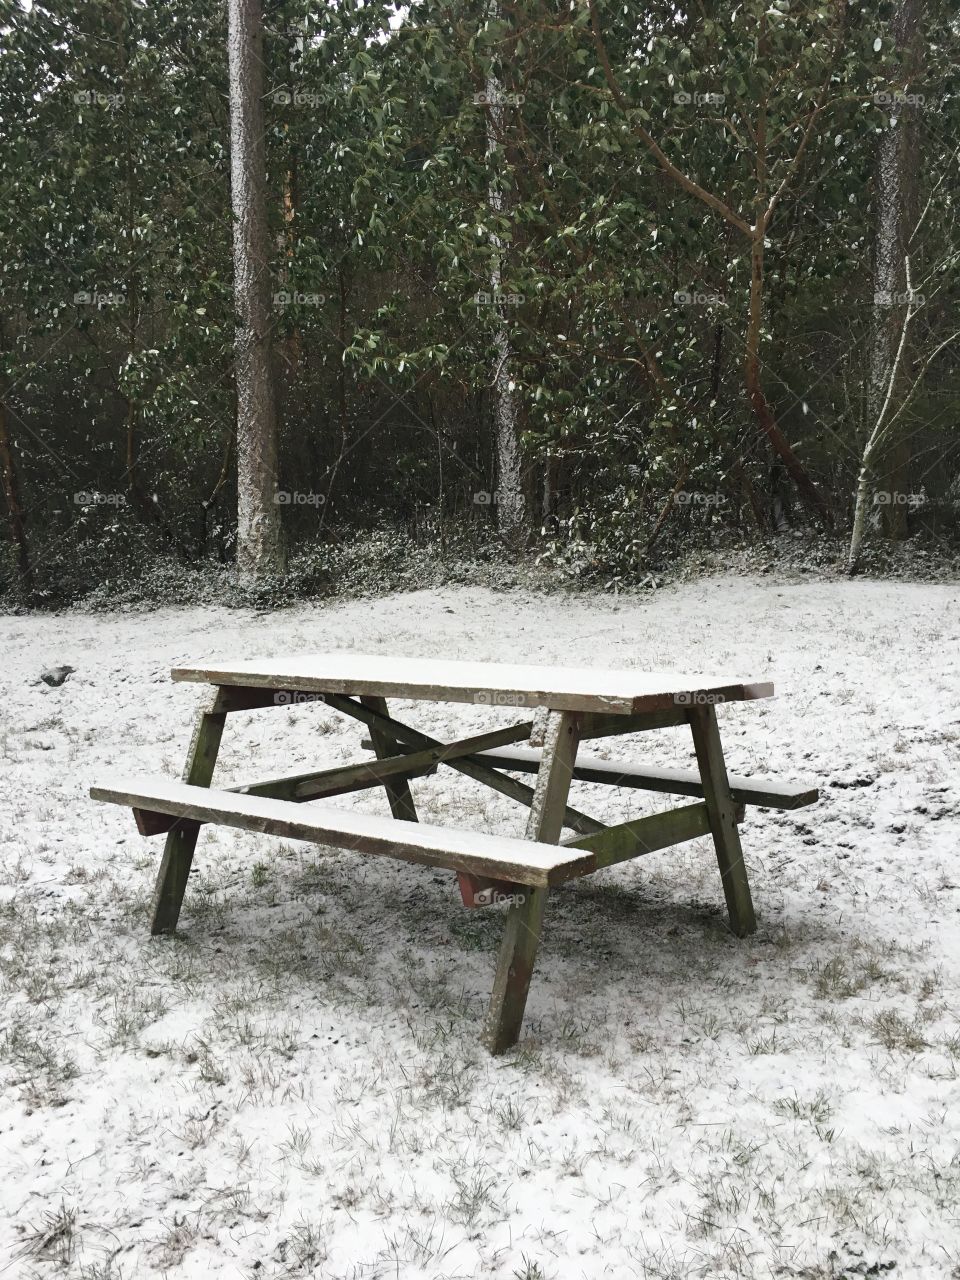 Empty picnic table in winter